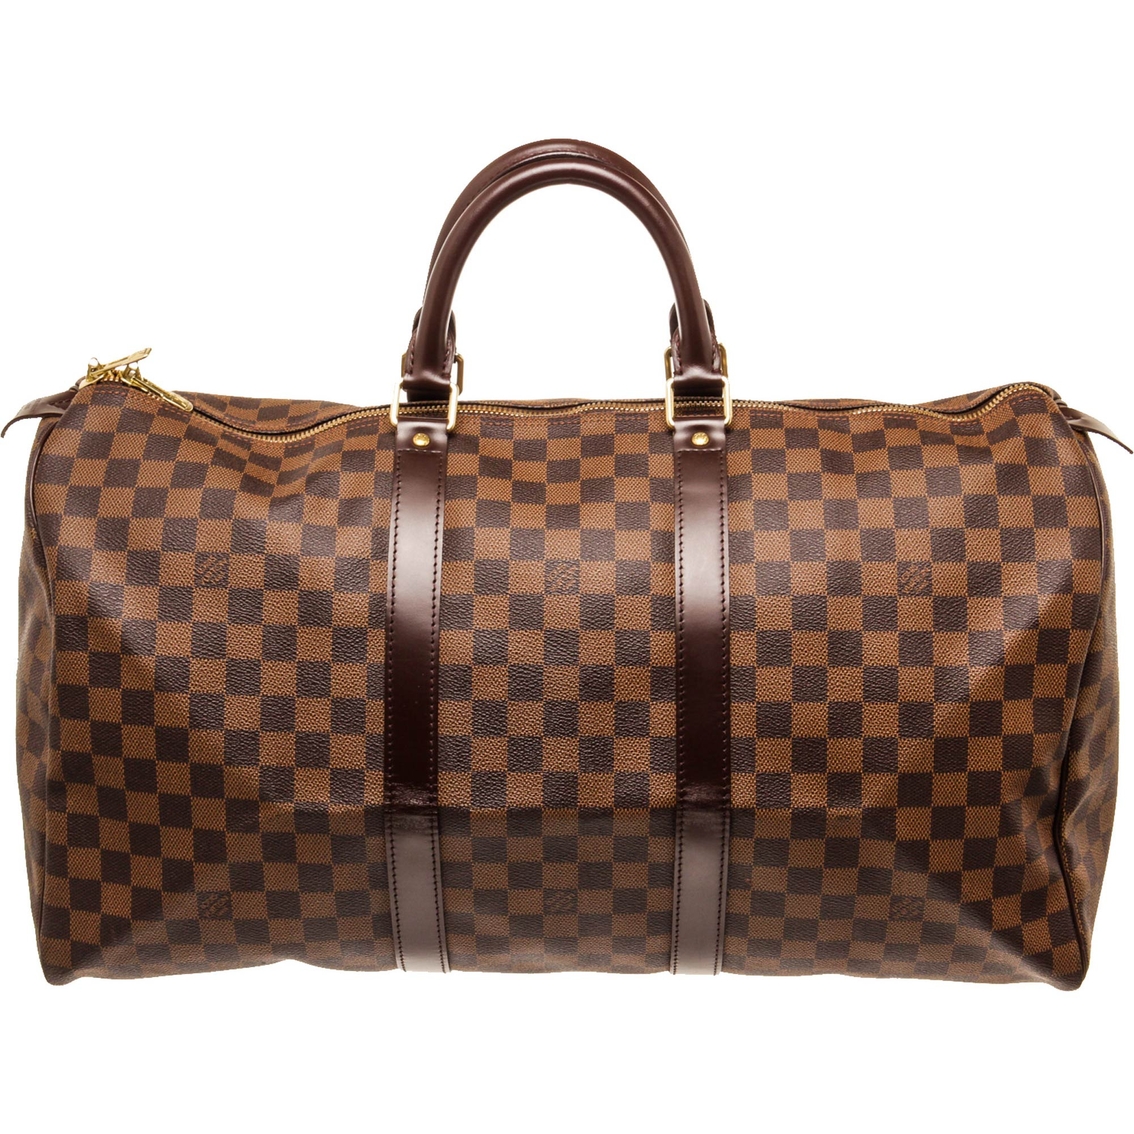 NBA x Louis Vuitton Keepall Duffle Bags Surface